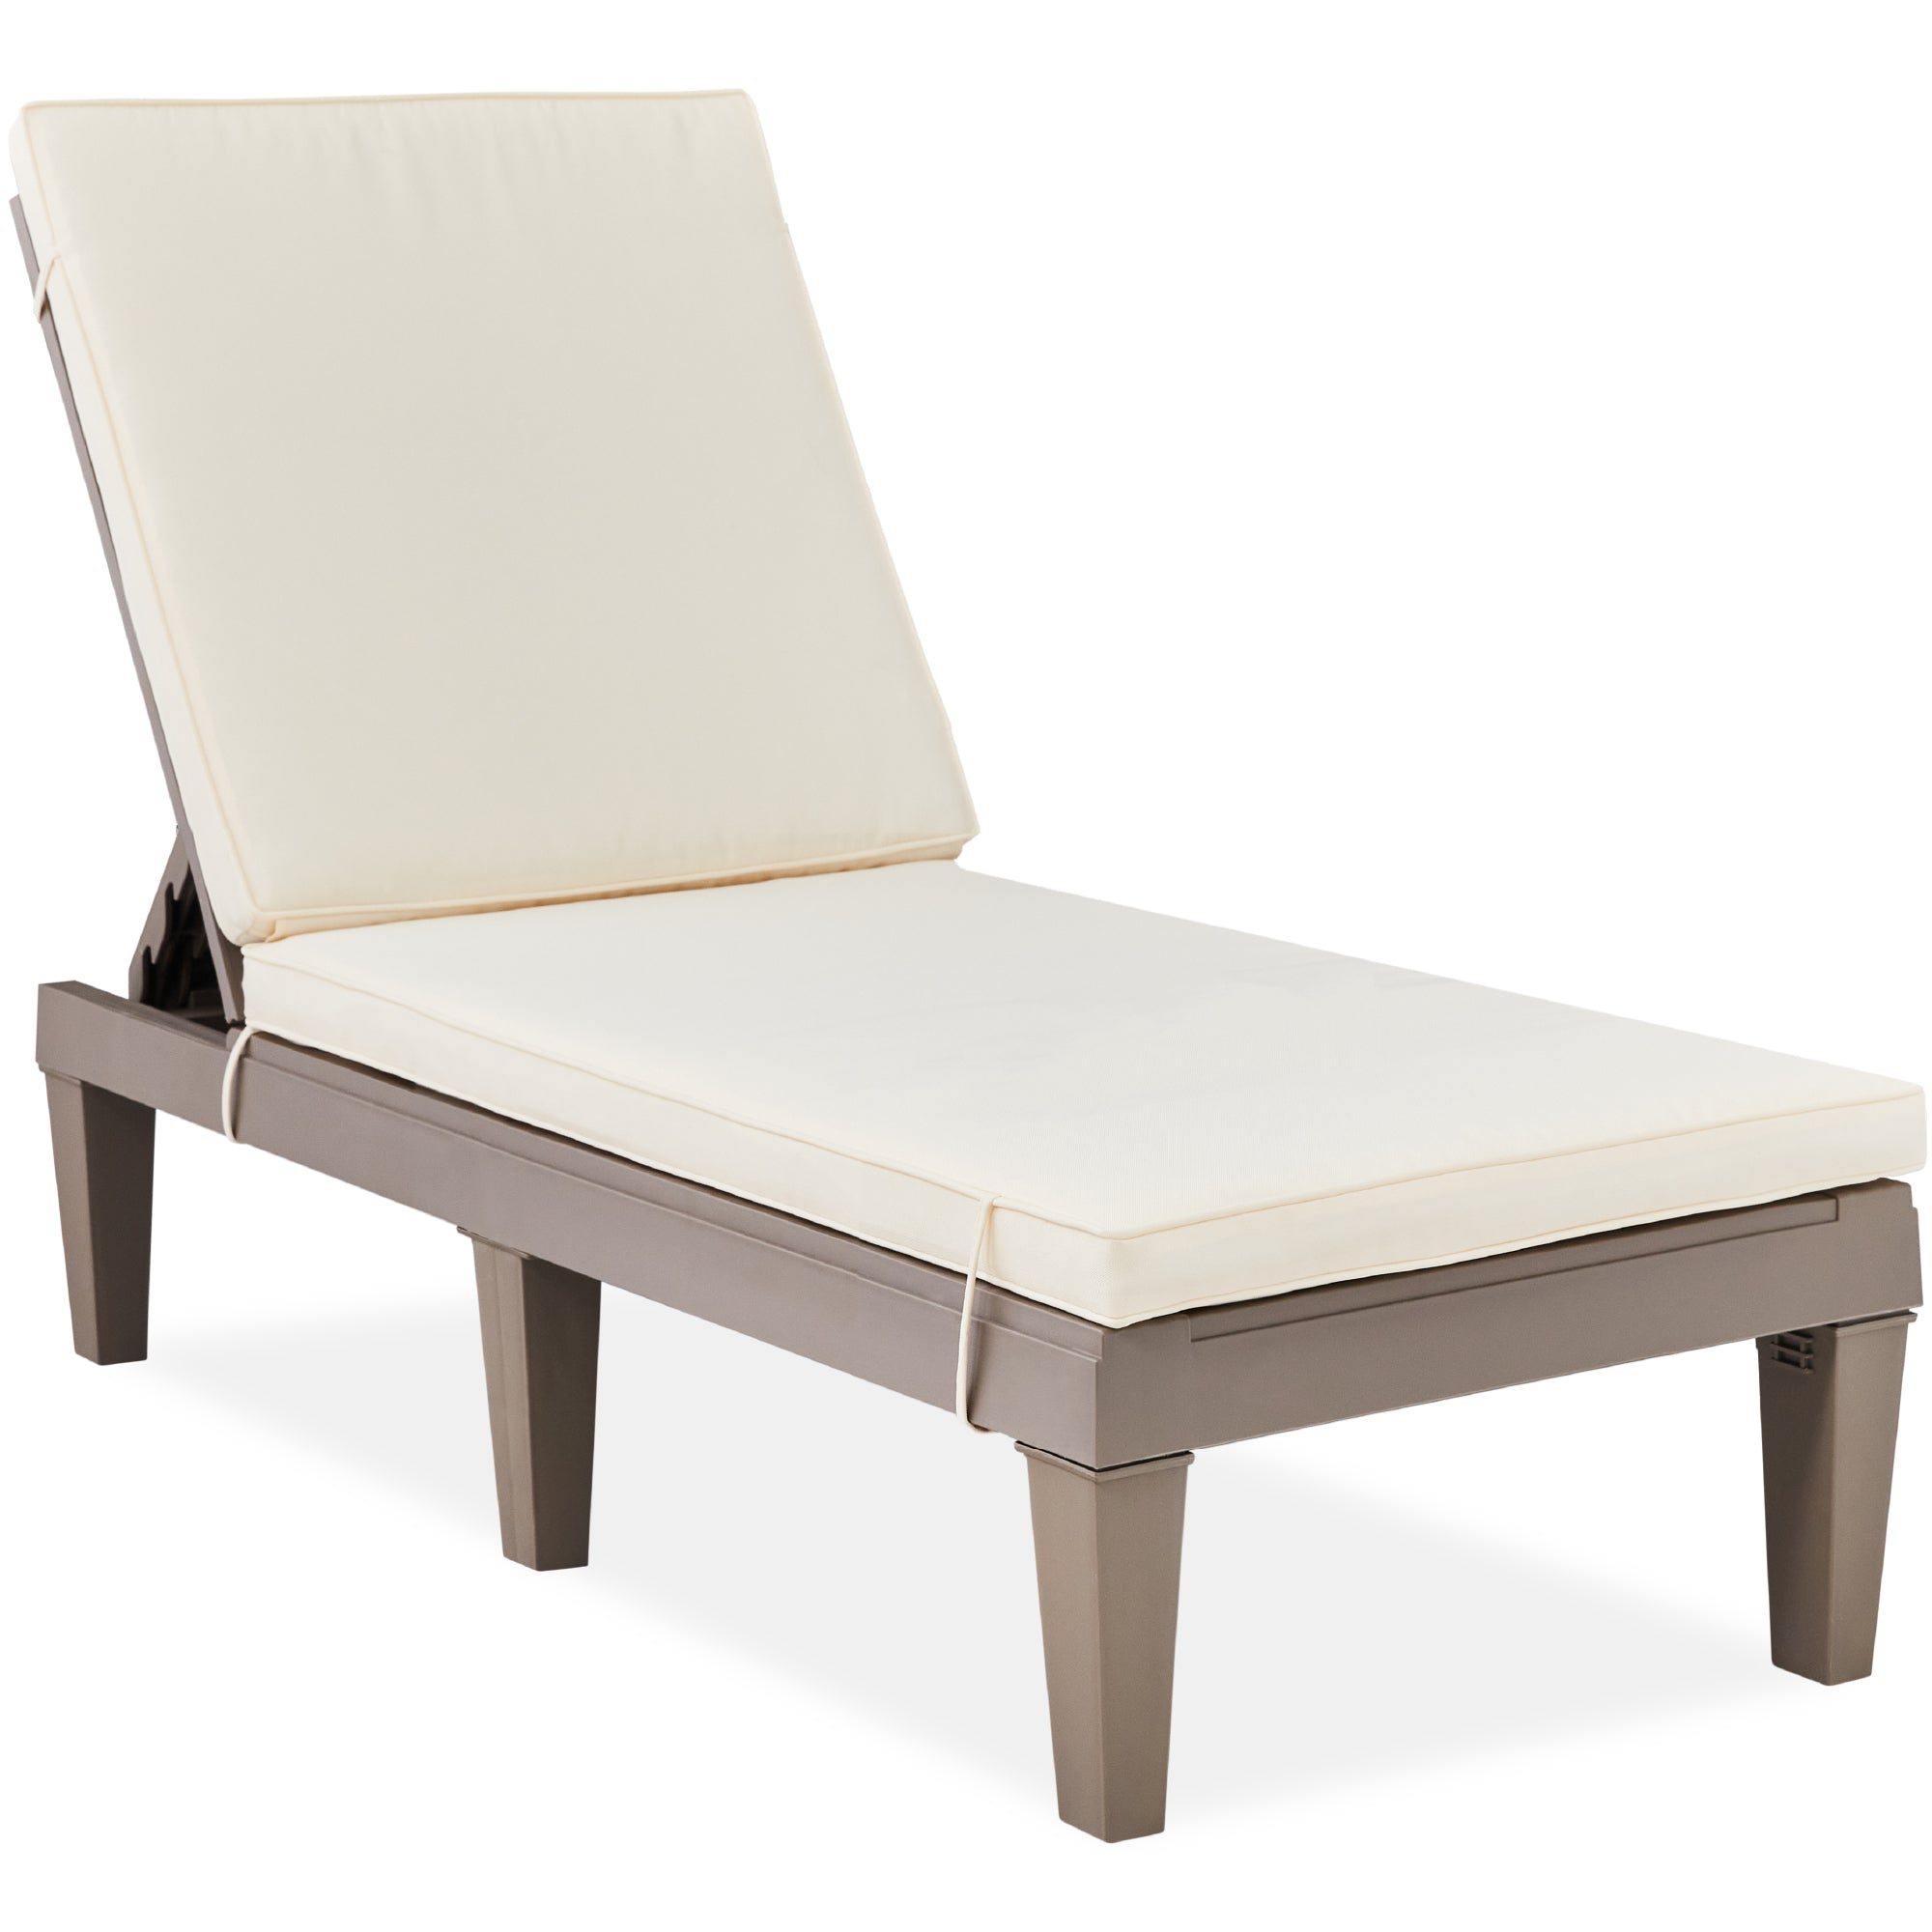 Rocking Chair Cushion,Garden Patio Sun lounger Cushion,Long Recliner  Reclining Chair Pad,Indoor Outdoor Chaise Lounger Cushion